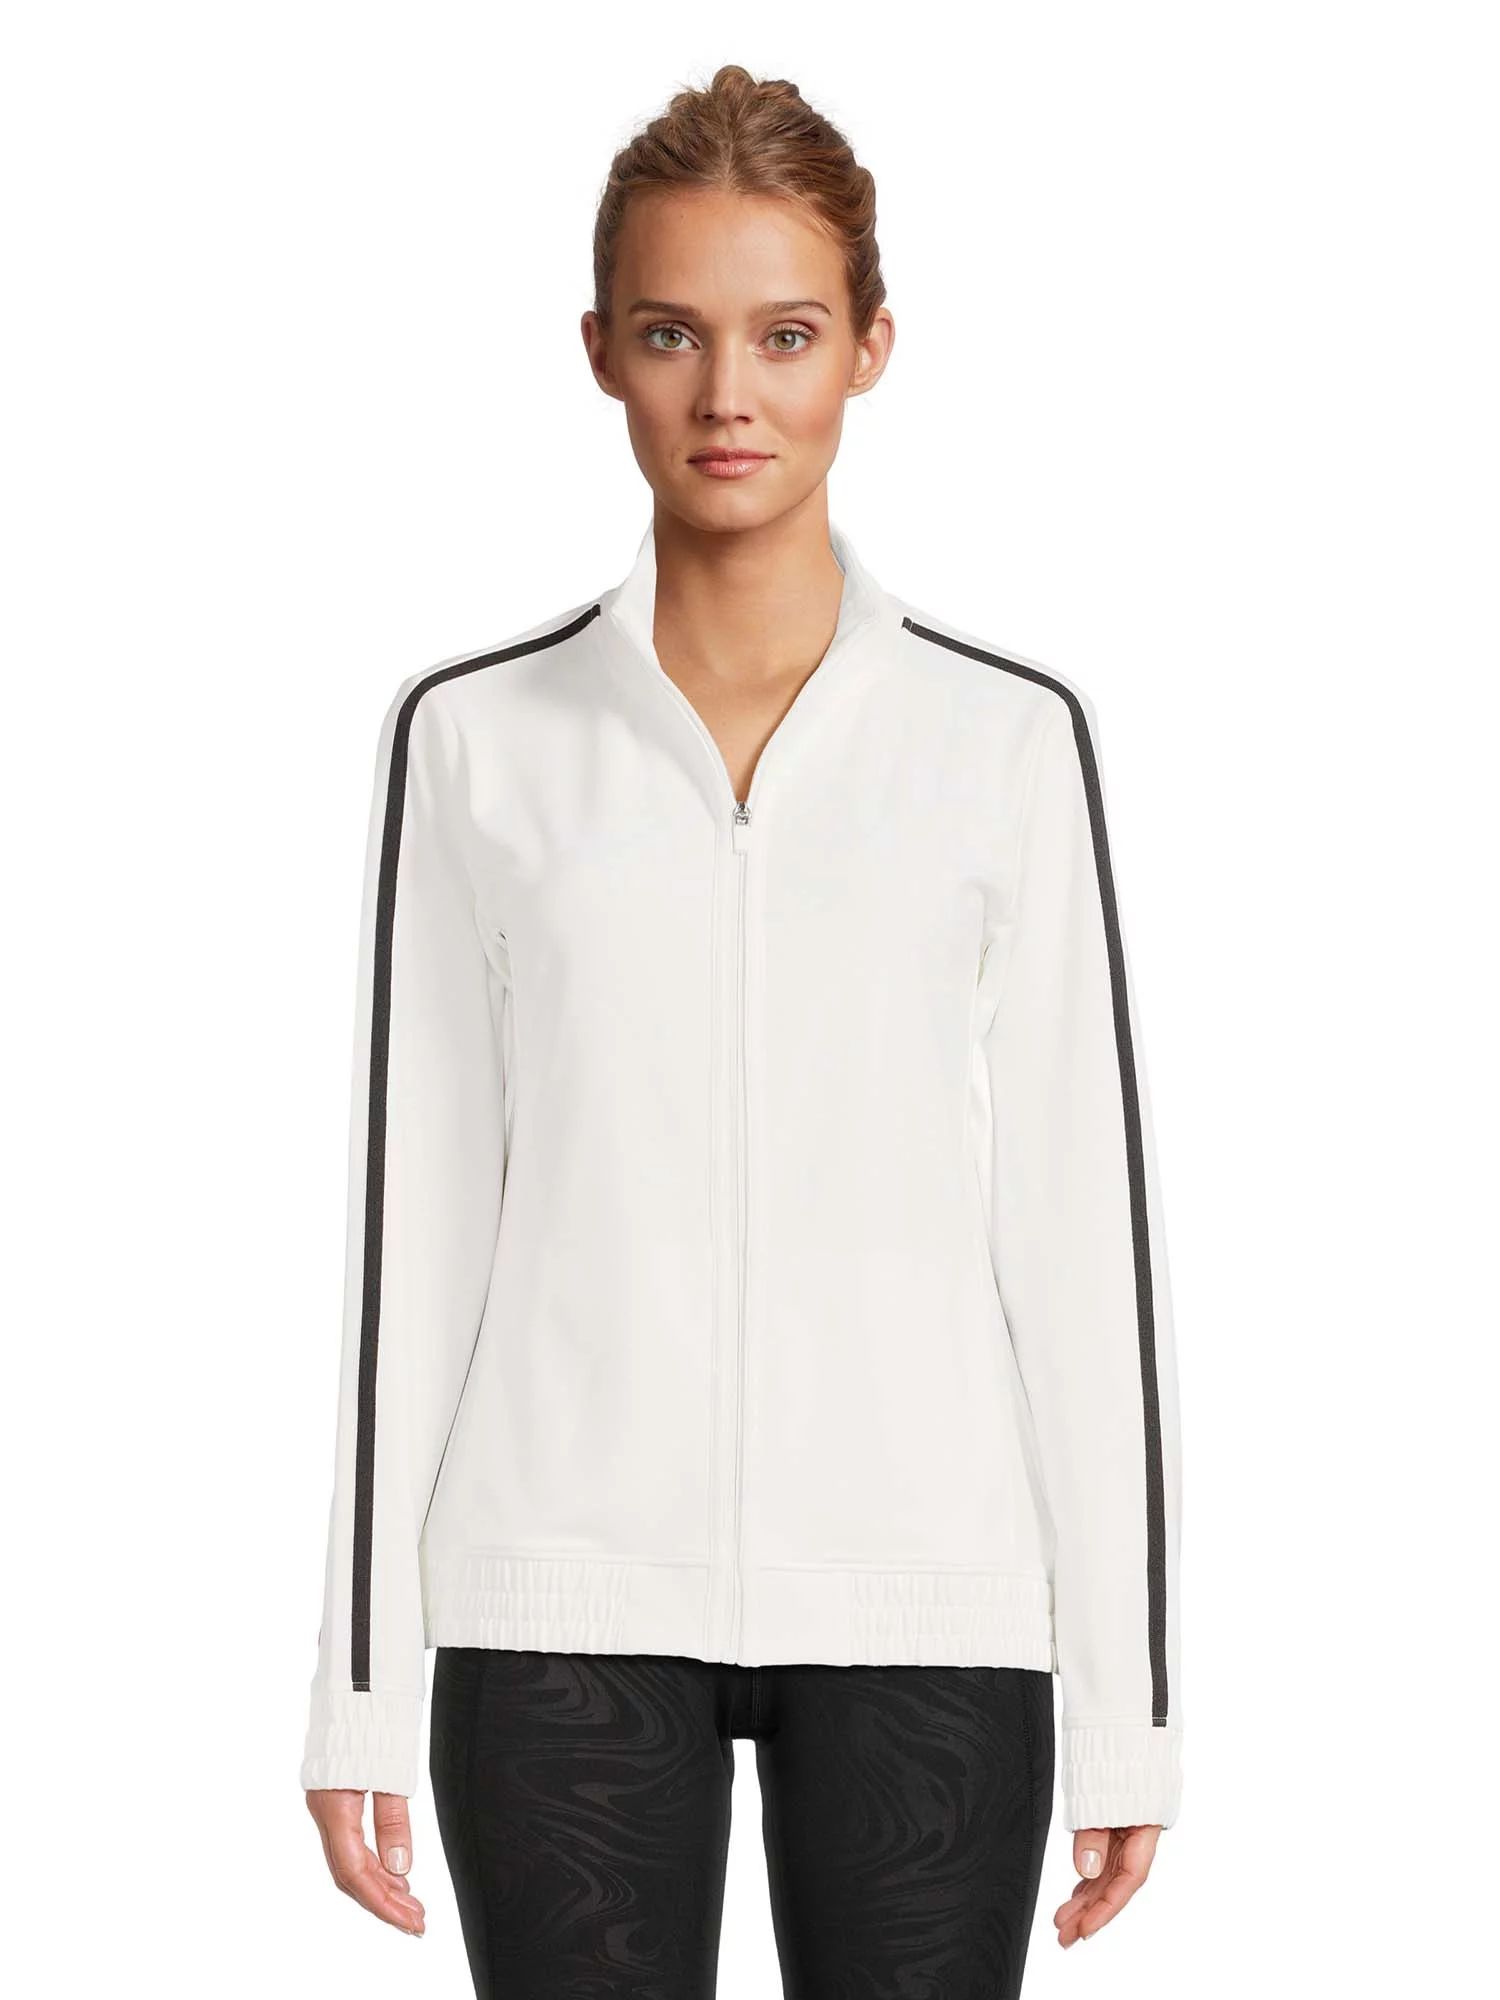 Avia Women's Long Sleeve Full Zip Track Jacket, Sizes XS-XXXL | Walmart (US)